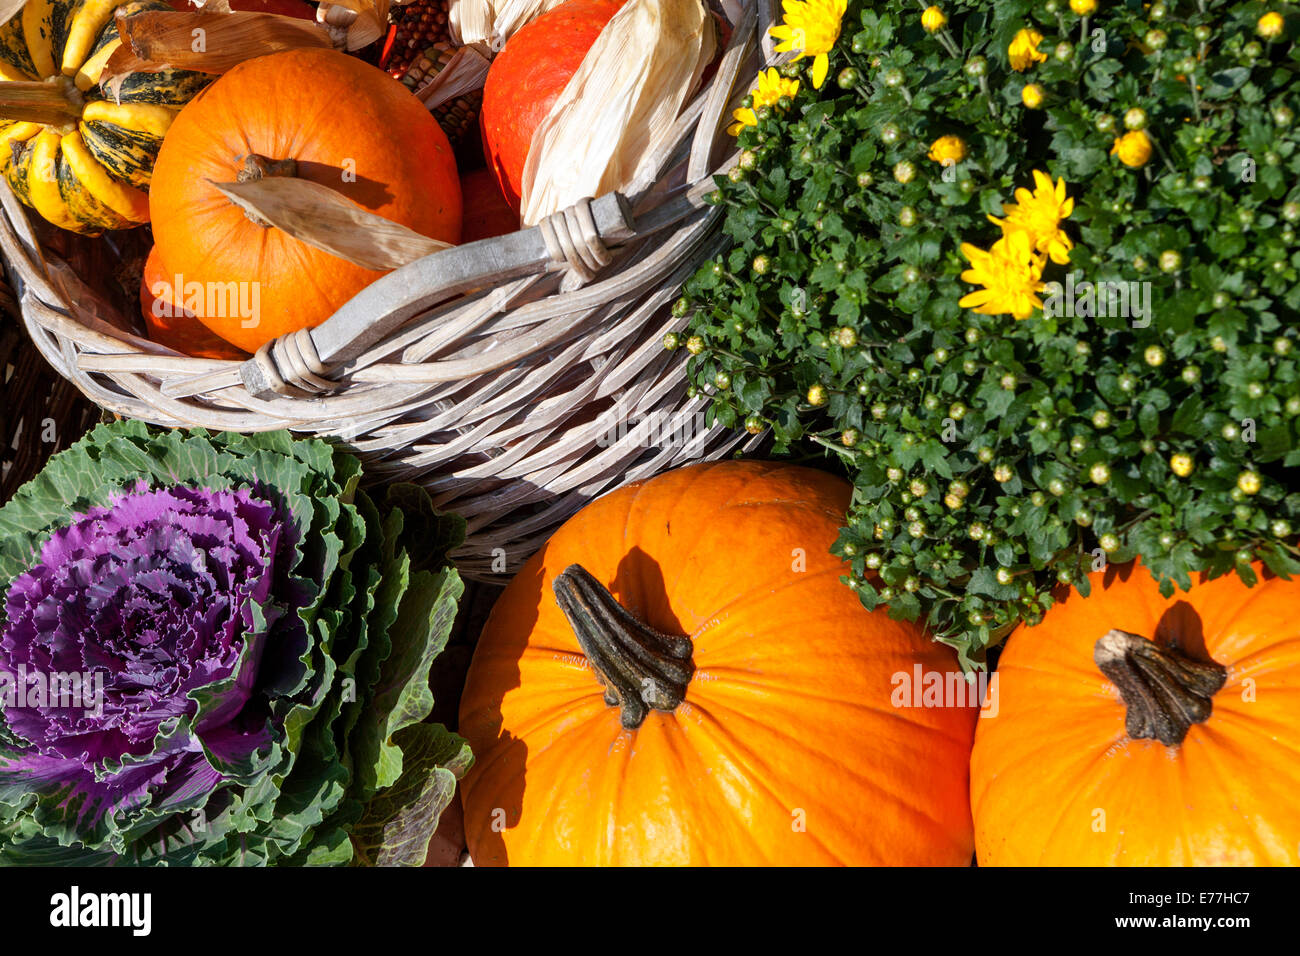 Pumpkin shop, squash, plants, Decorative display ornamental gourd in a vintage basket mums Stock Photo